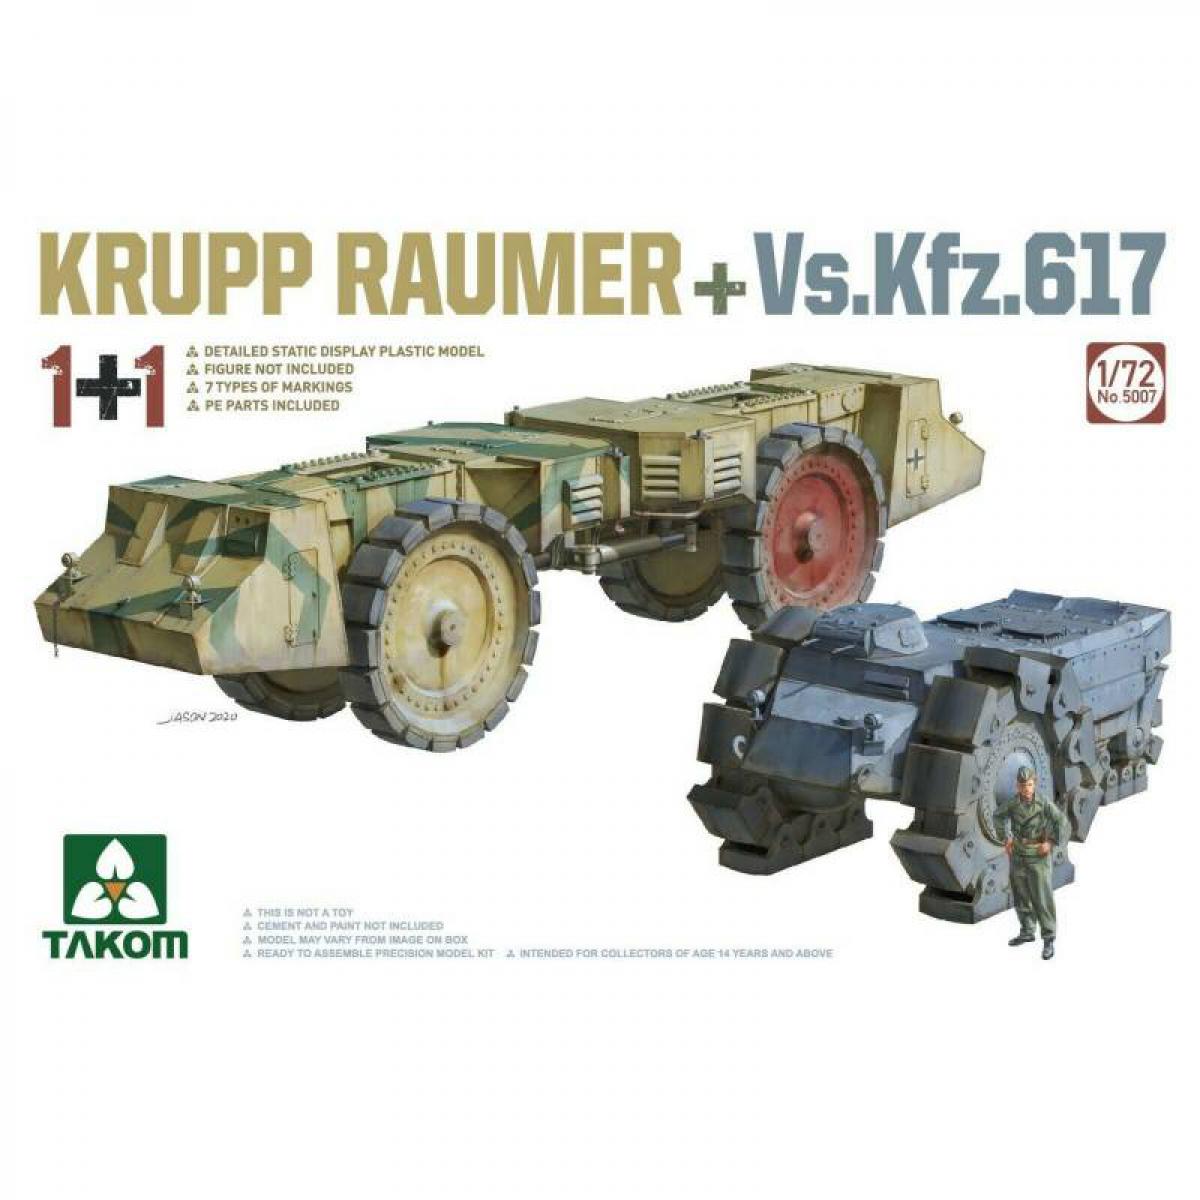 Takom - Maquette Véhicule Krupp Räumer +vs.kfz.617 - Chars